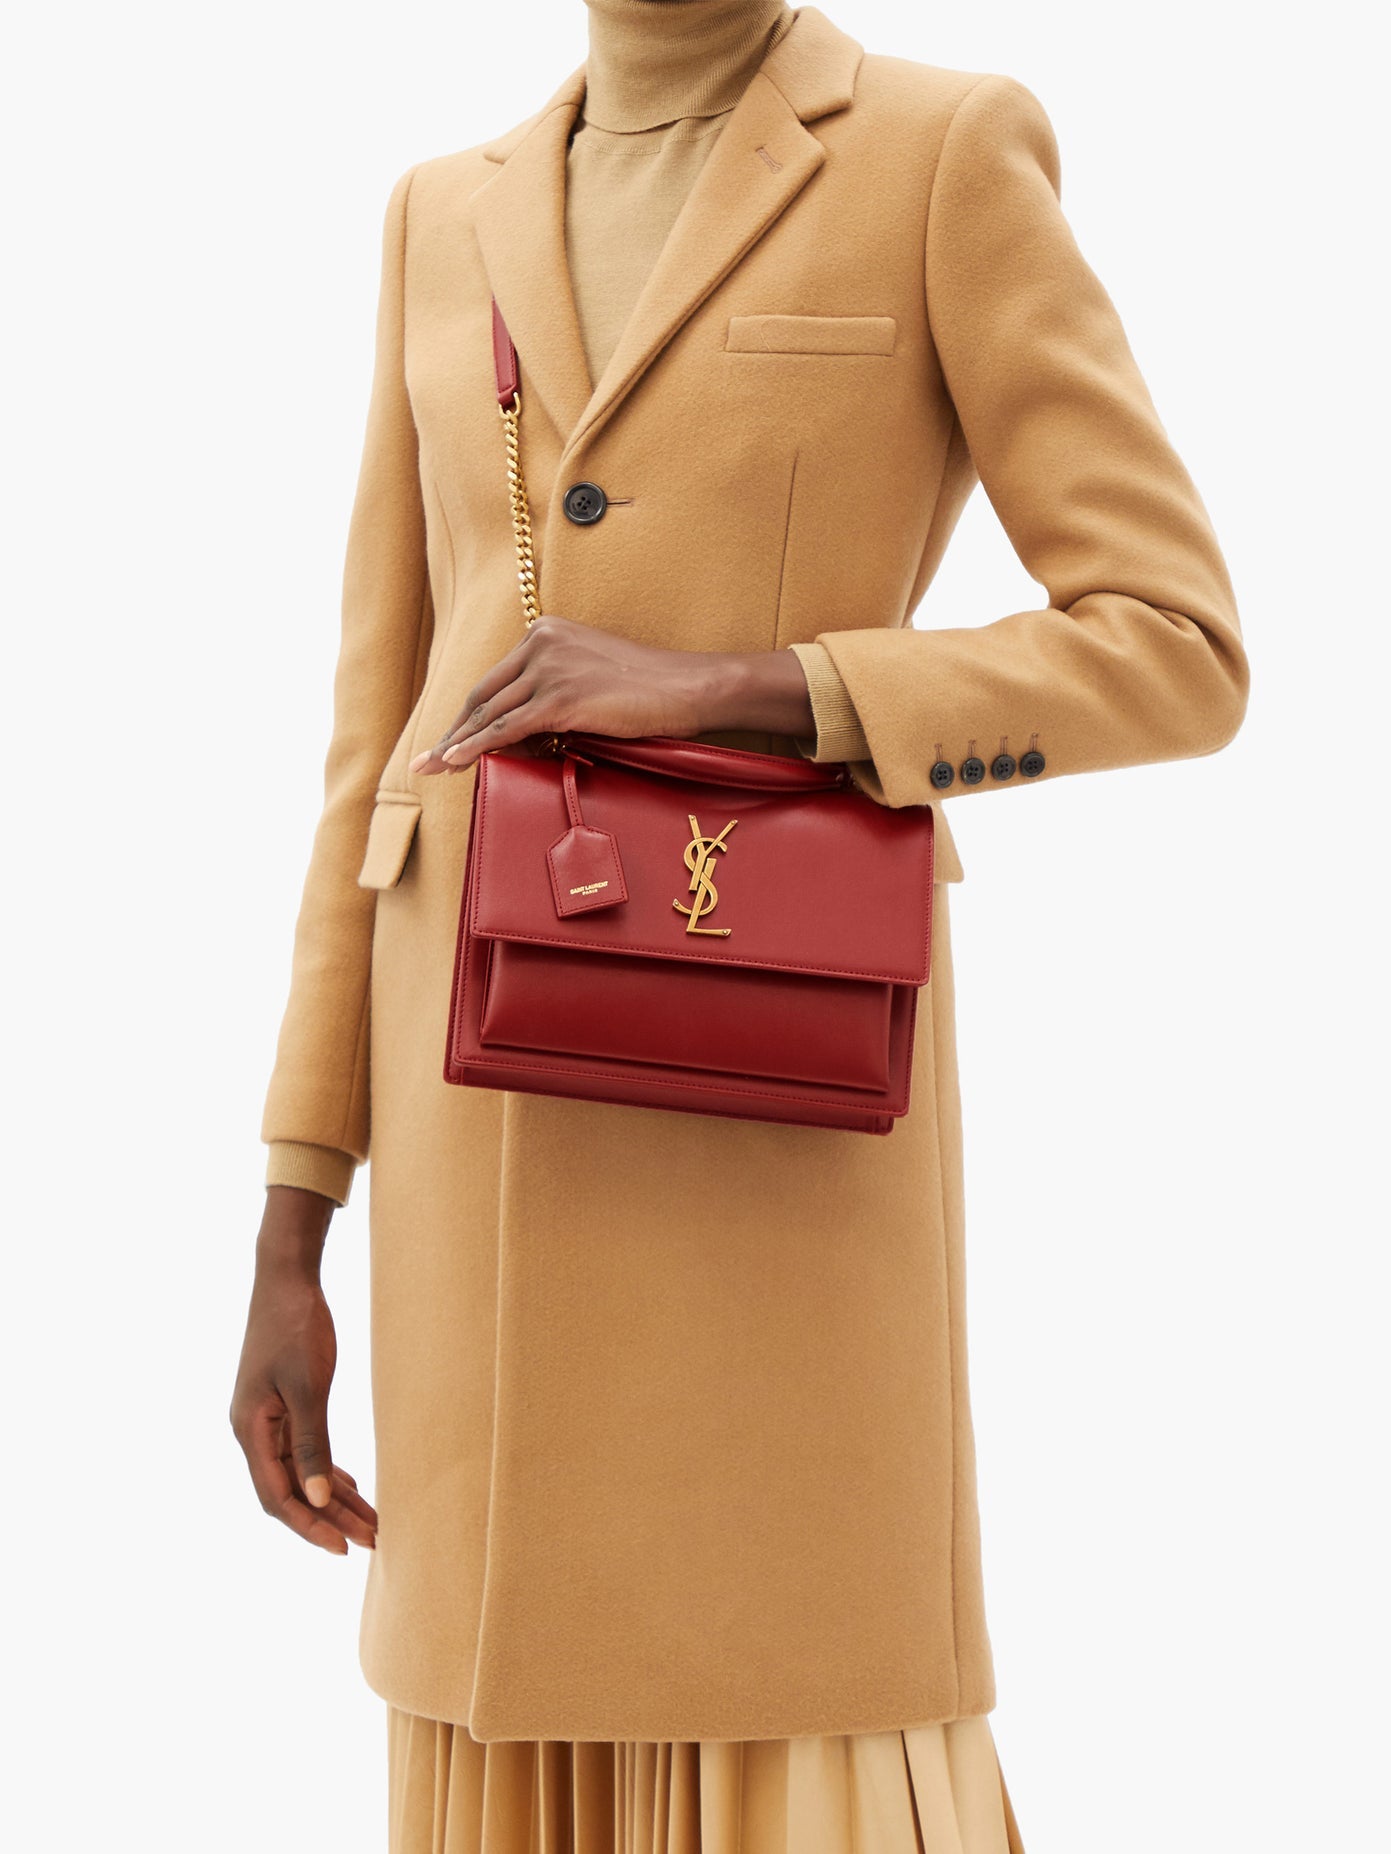 Saint Laurent Medium Sunset Leather Shoulder Bag